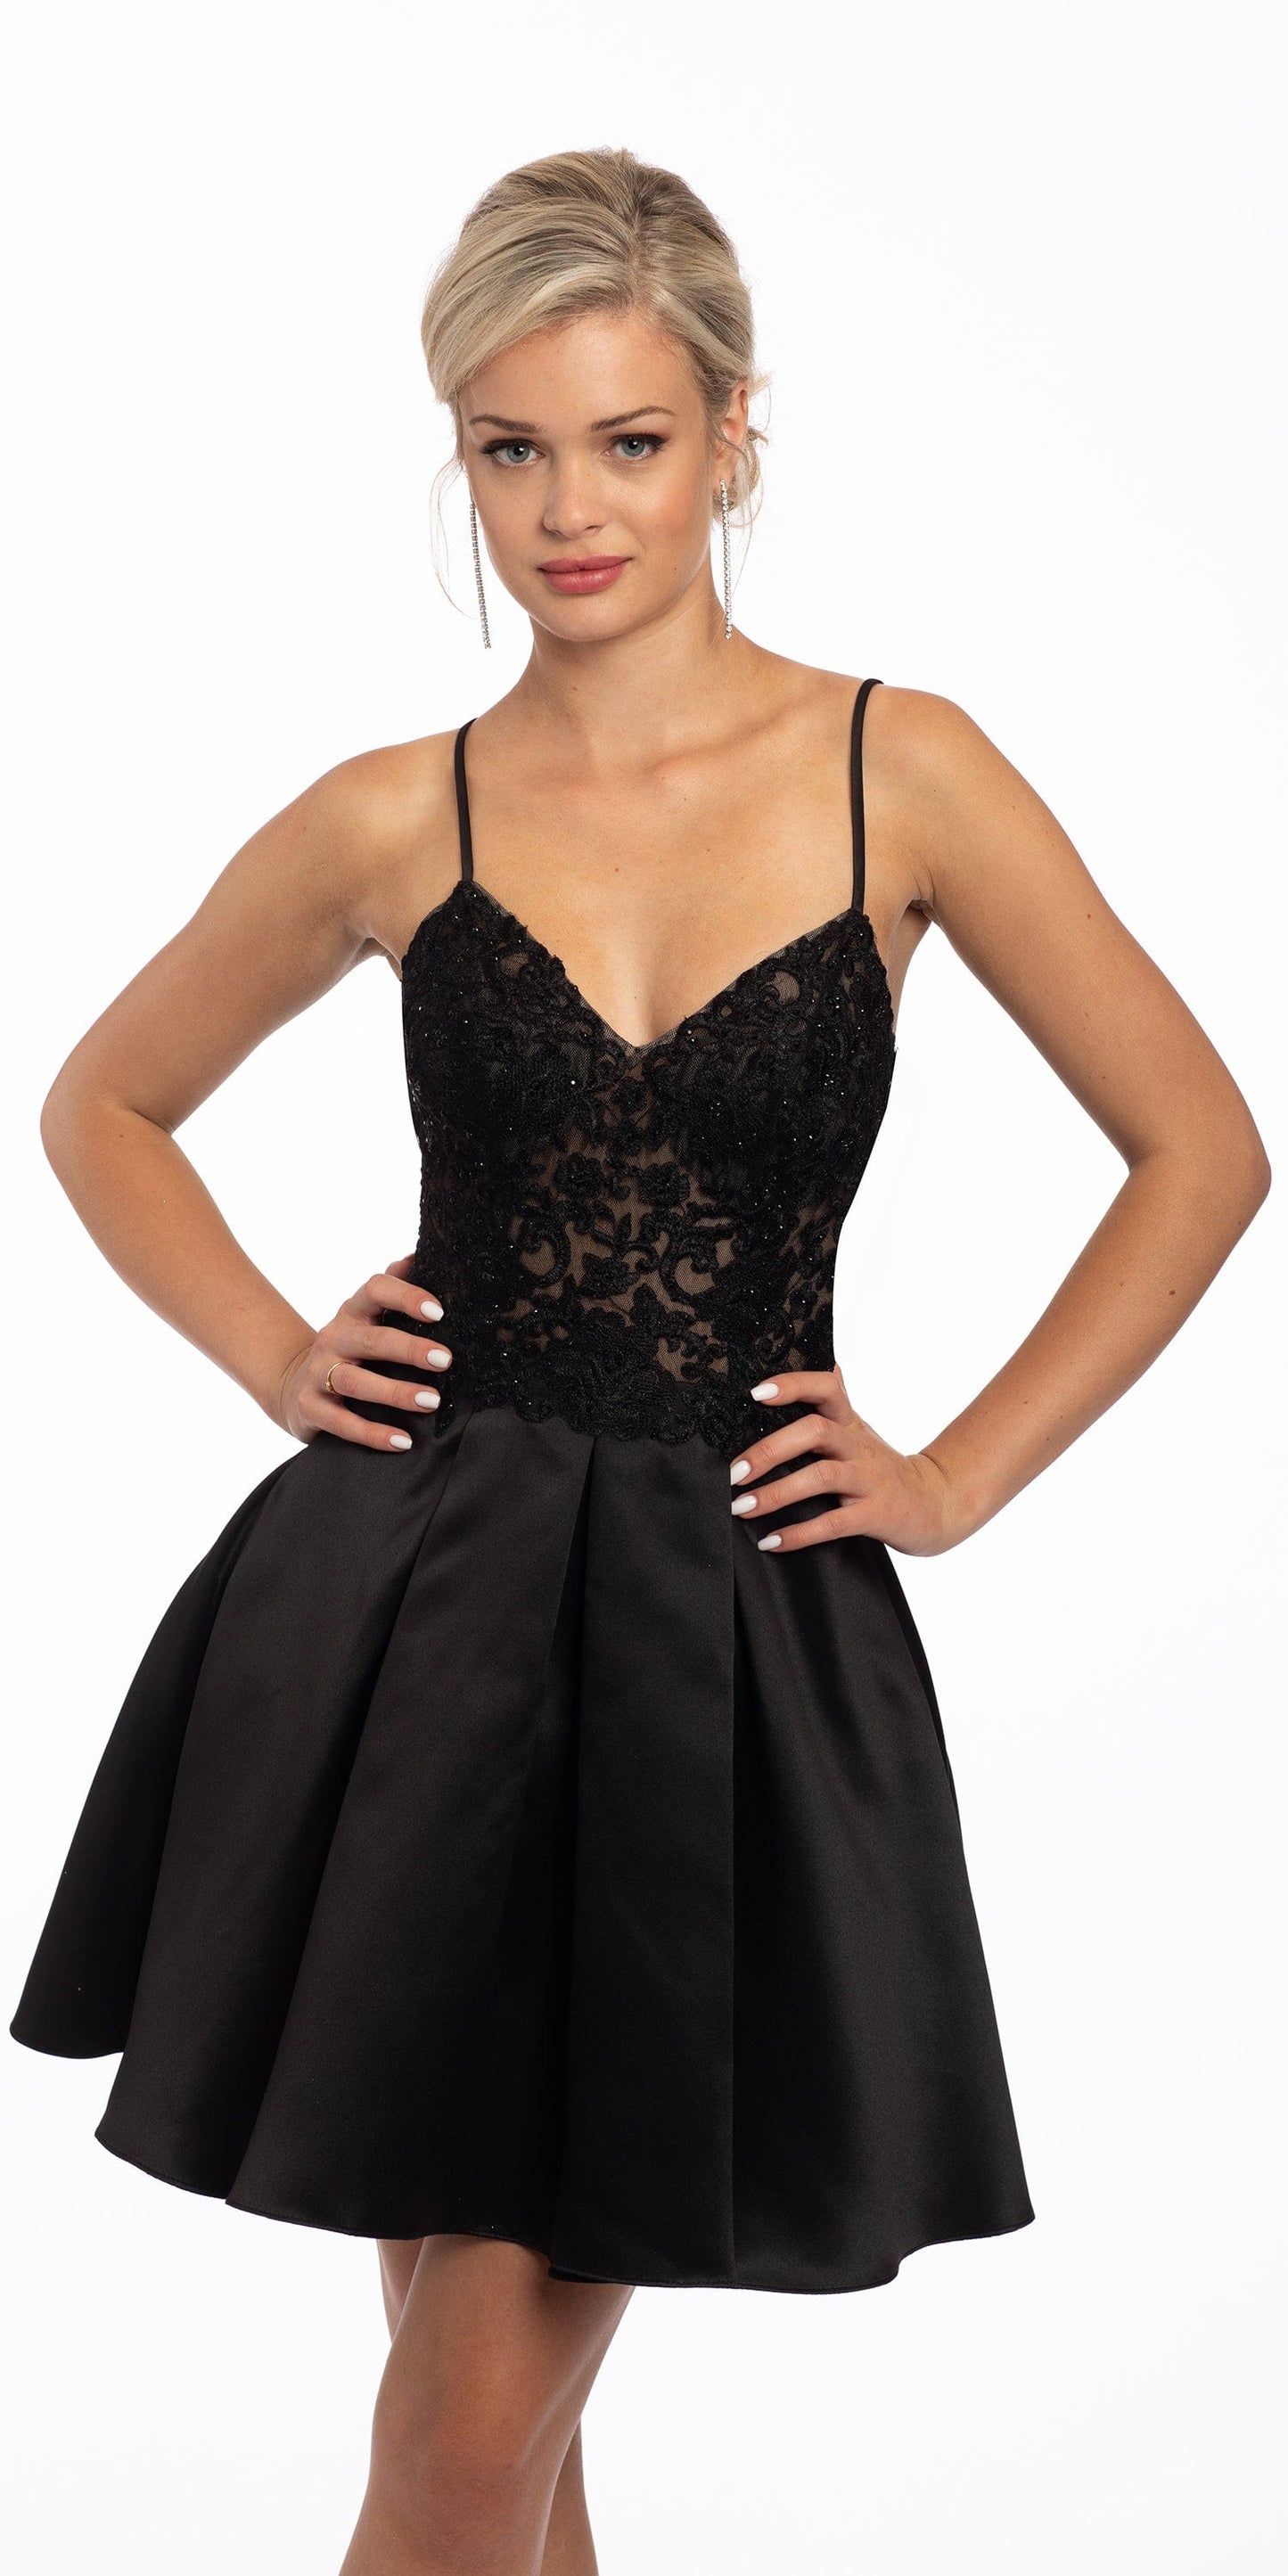 Camille La Vie Taffeta Lace Corset Fit and Flare Dress missy / 6 / black